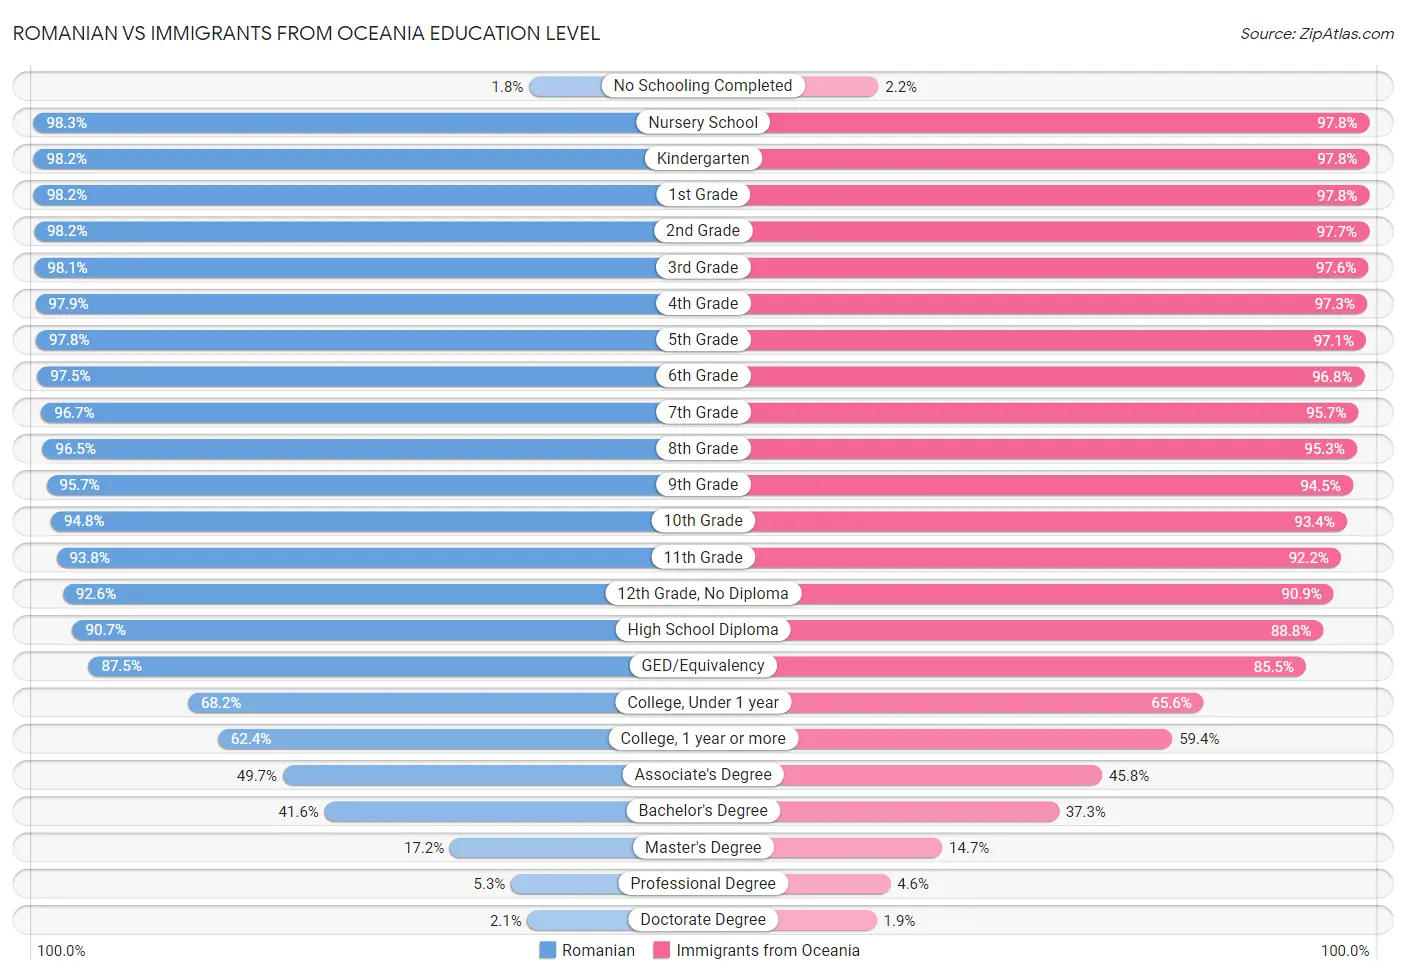 Romanian vs Immigrants from Oceania Education Level